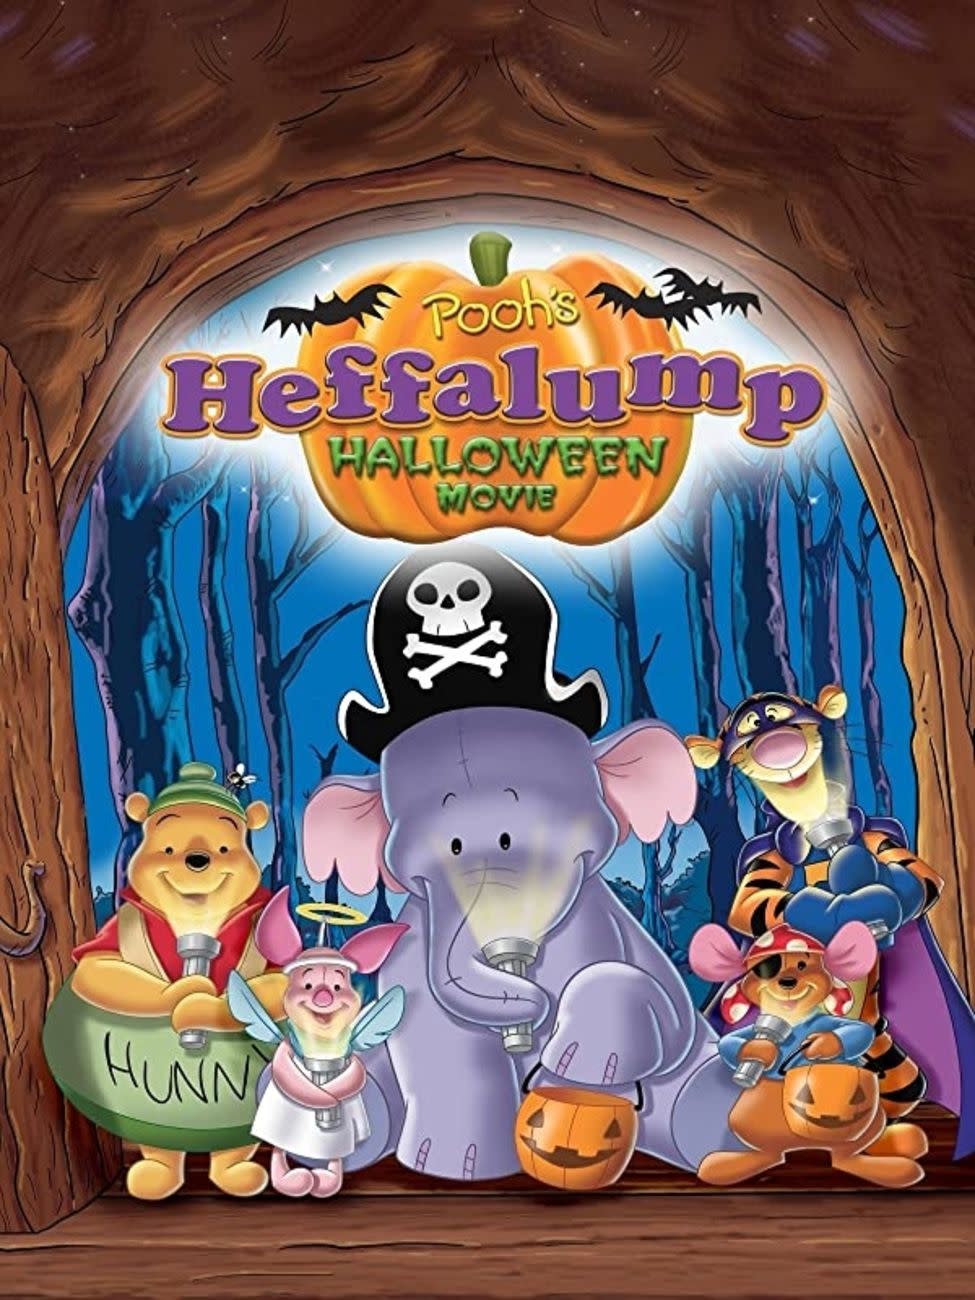 pooh's heffalump halloween movie disney halloween movies